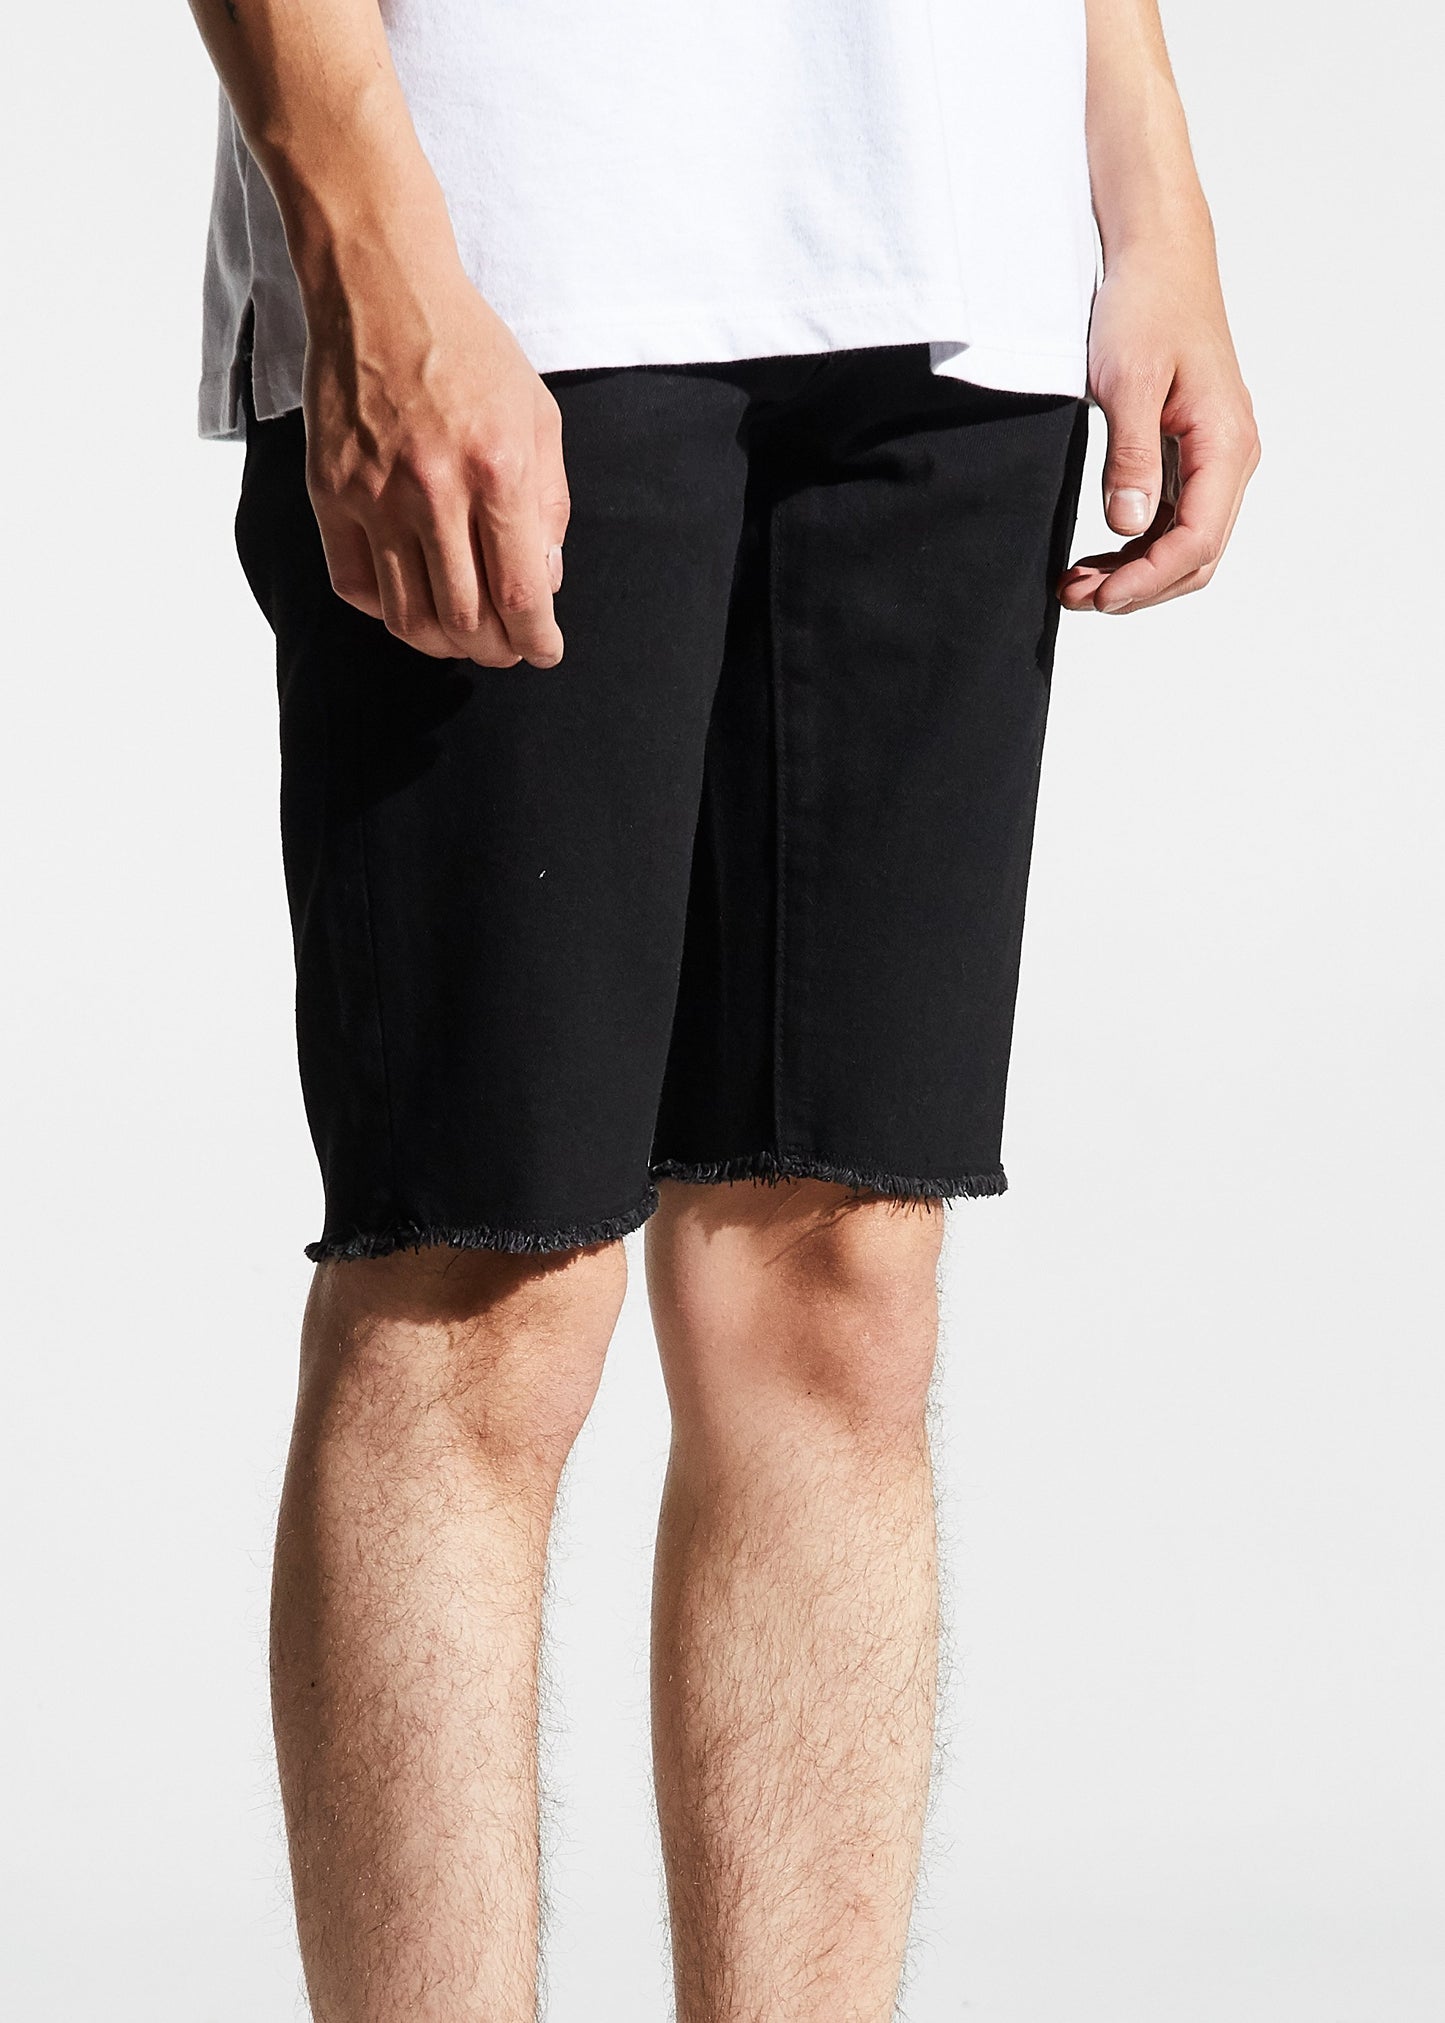 Pacific Shorts (Black)